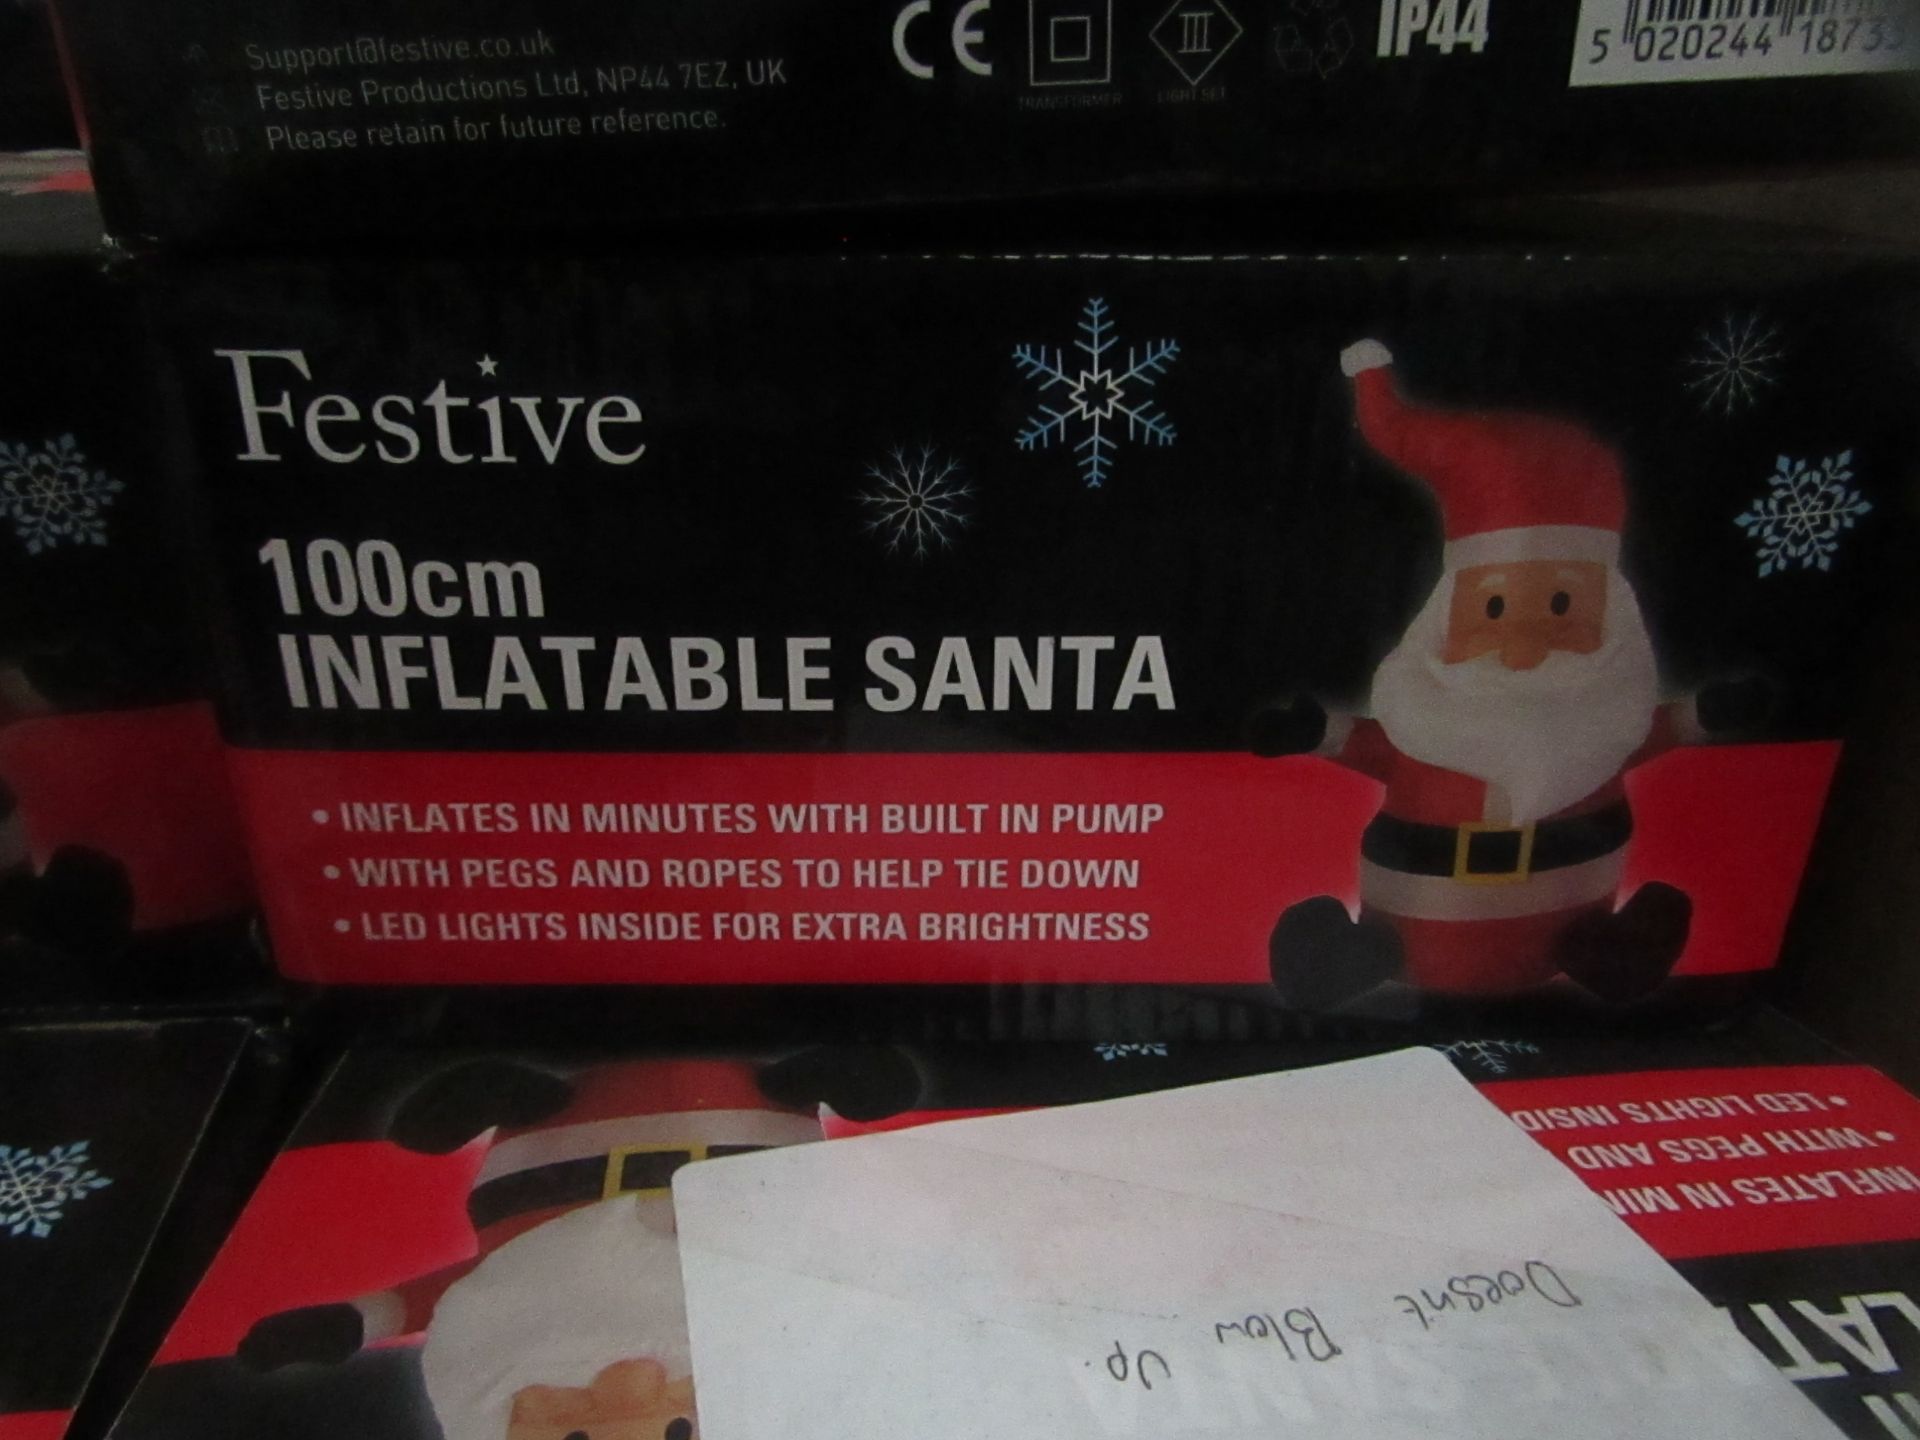 2x Festive - 100cm Inflatable Santa - Untested & Boxed.